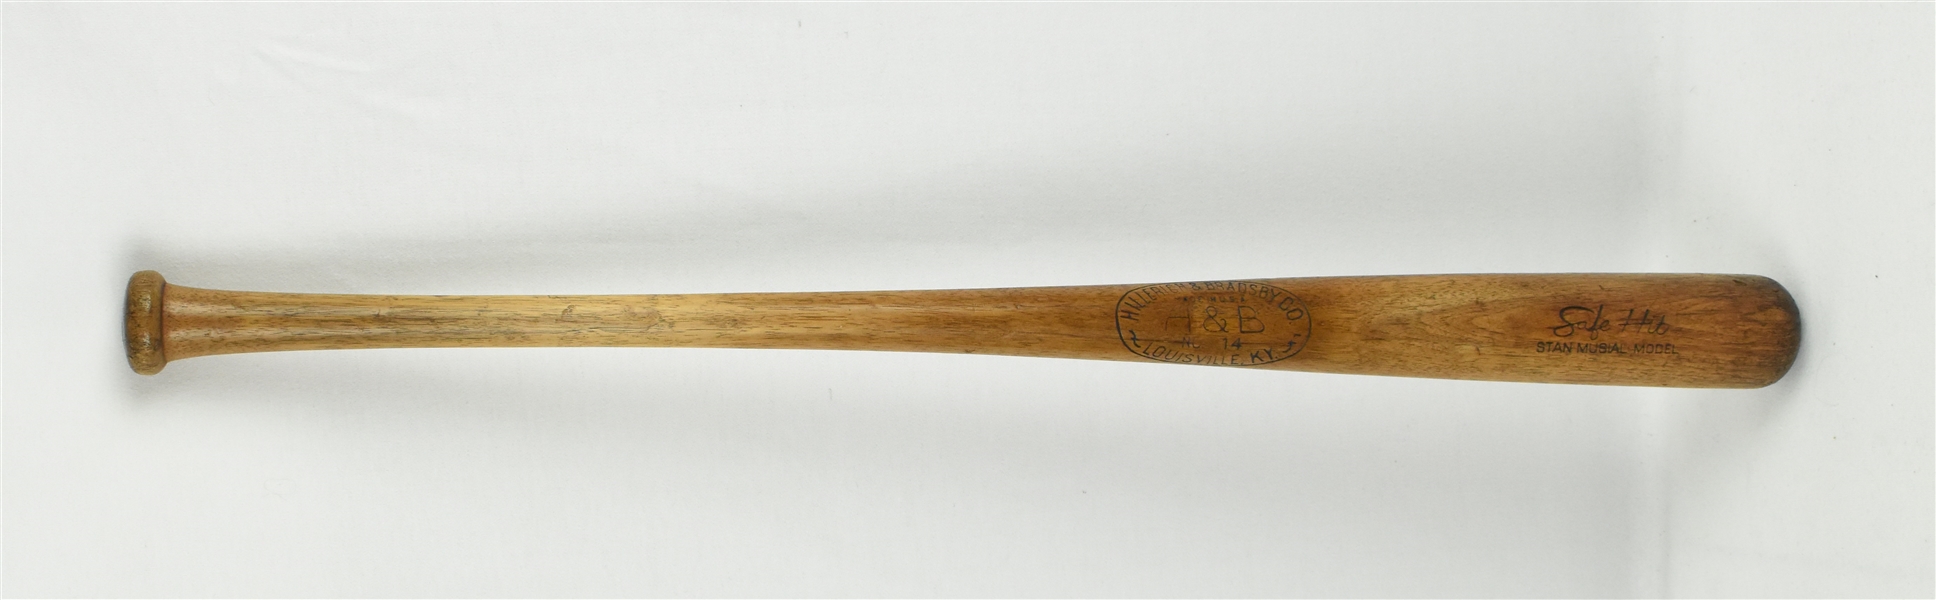 Stan Musial 1932-1952 Louisville Slugger Safe Hit Bat